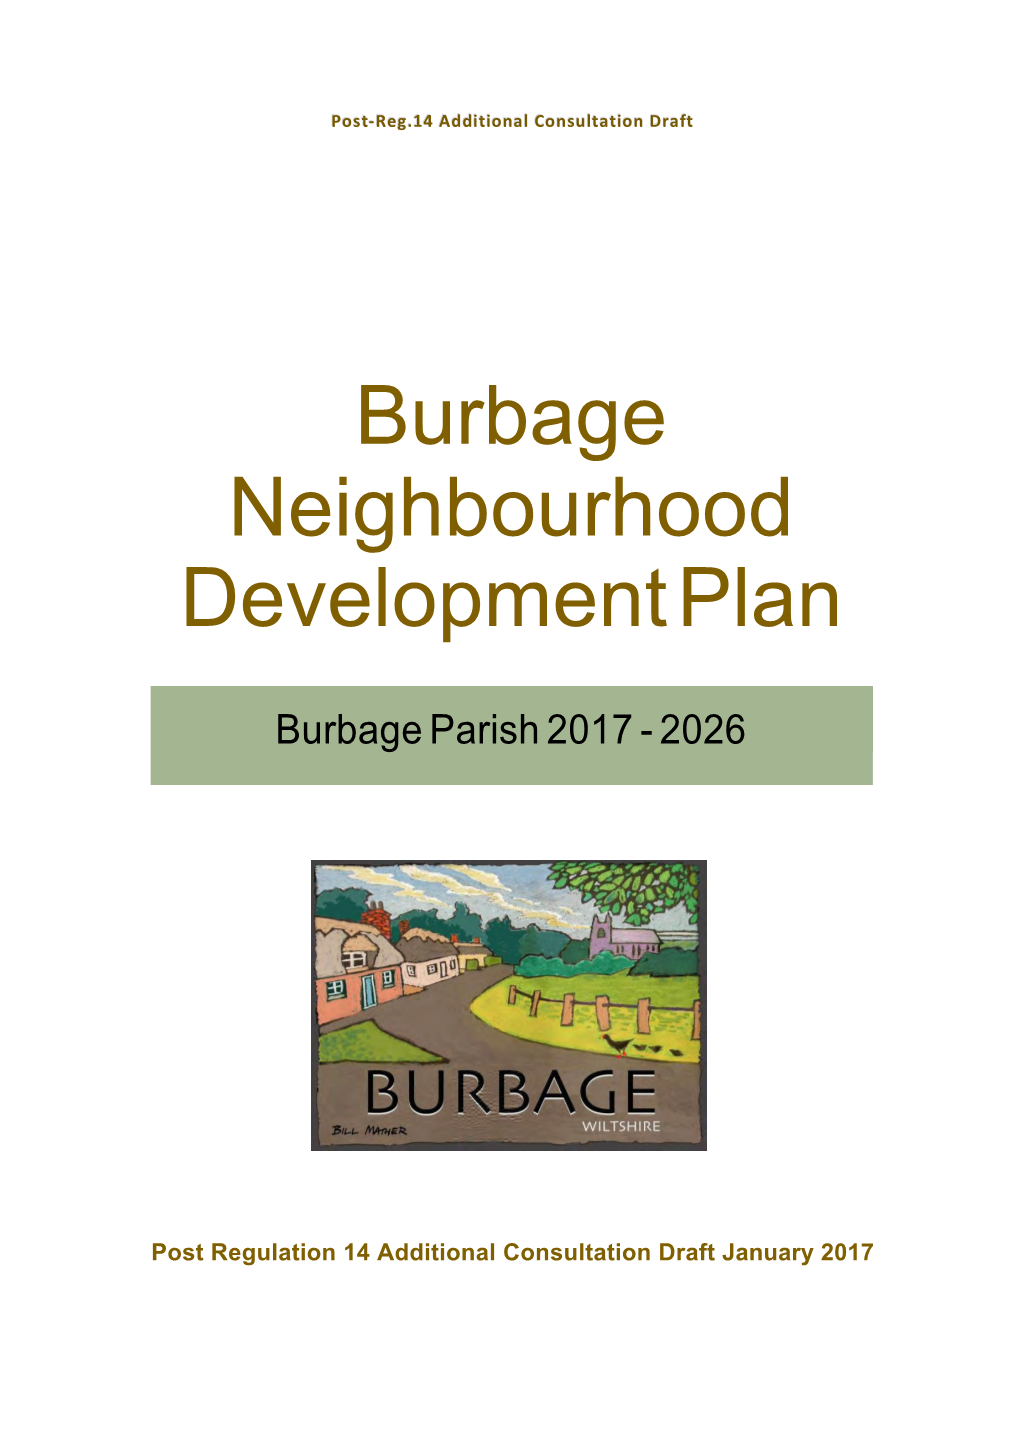 Burbage Neighbourhood Development Plan